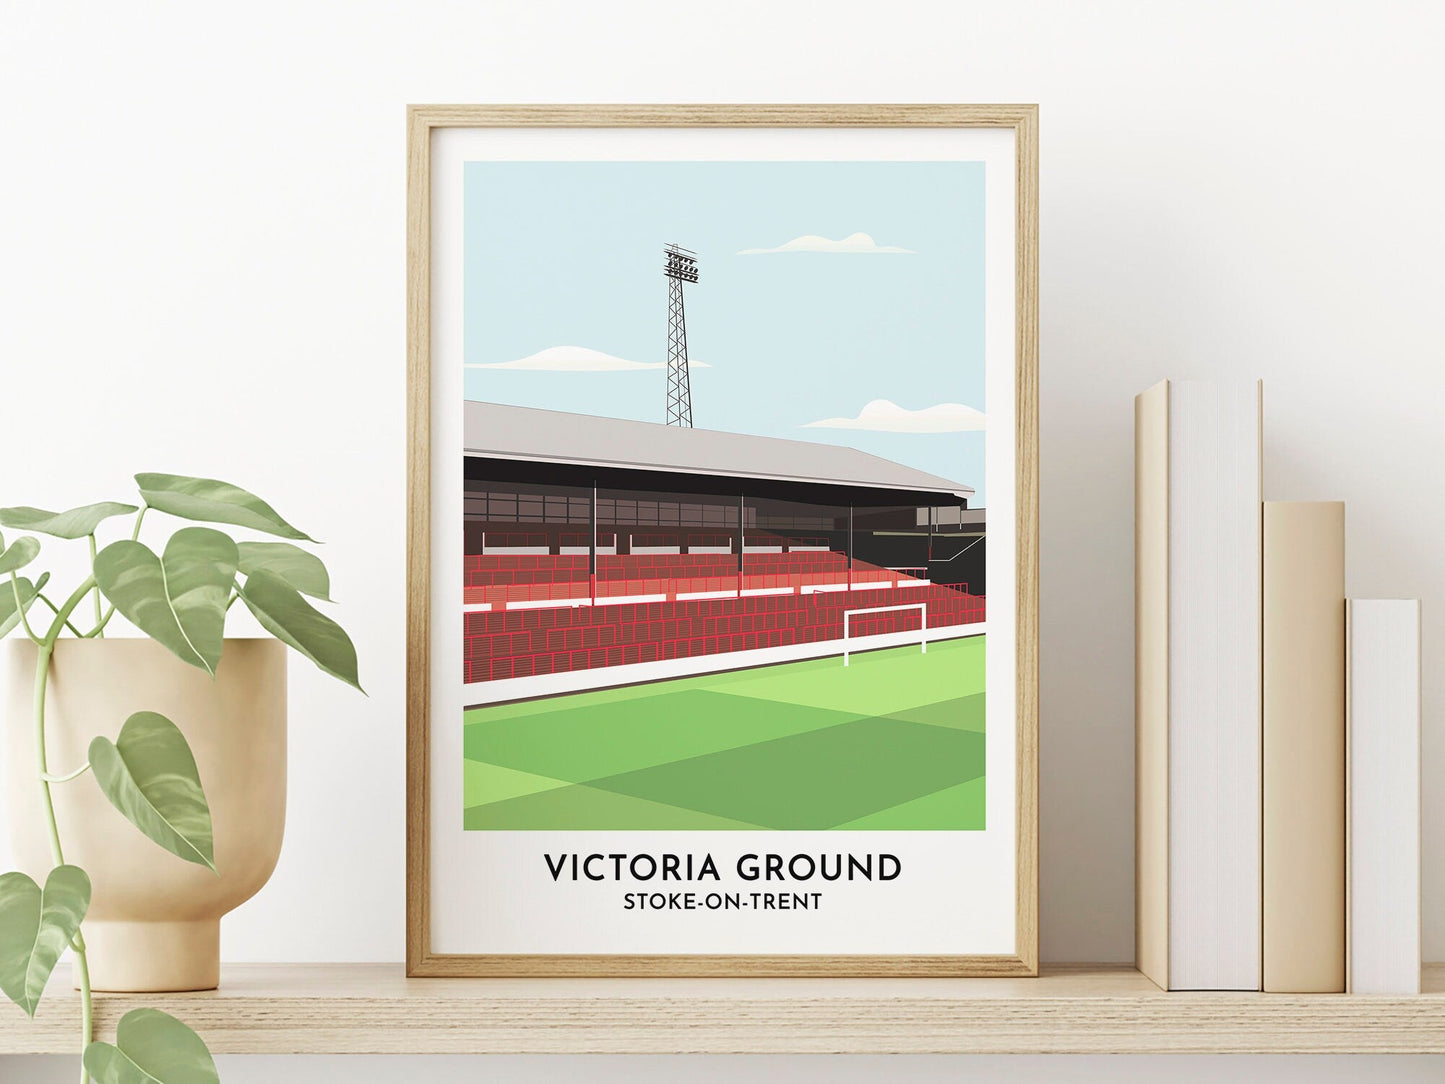 Stoke Football Gift - Victoria Ground Illustrated Print - Retro Football Memorabilia - Home Office Gift for Dad - Football Art - Turf Football Art